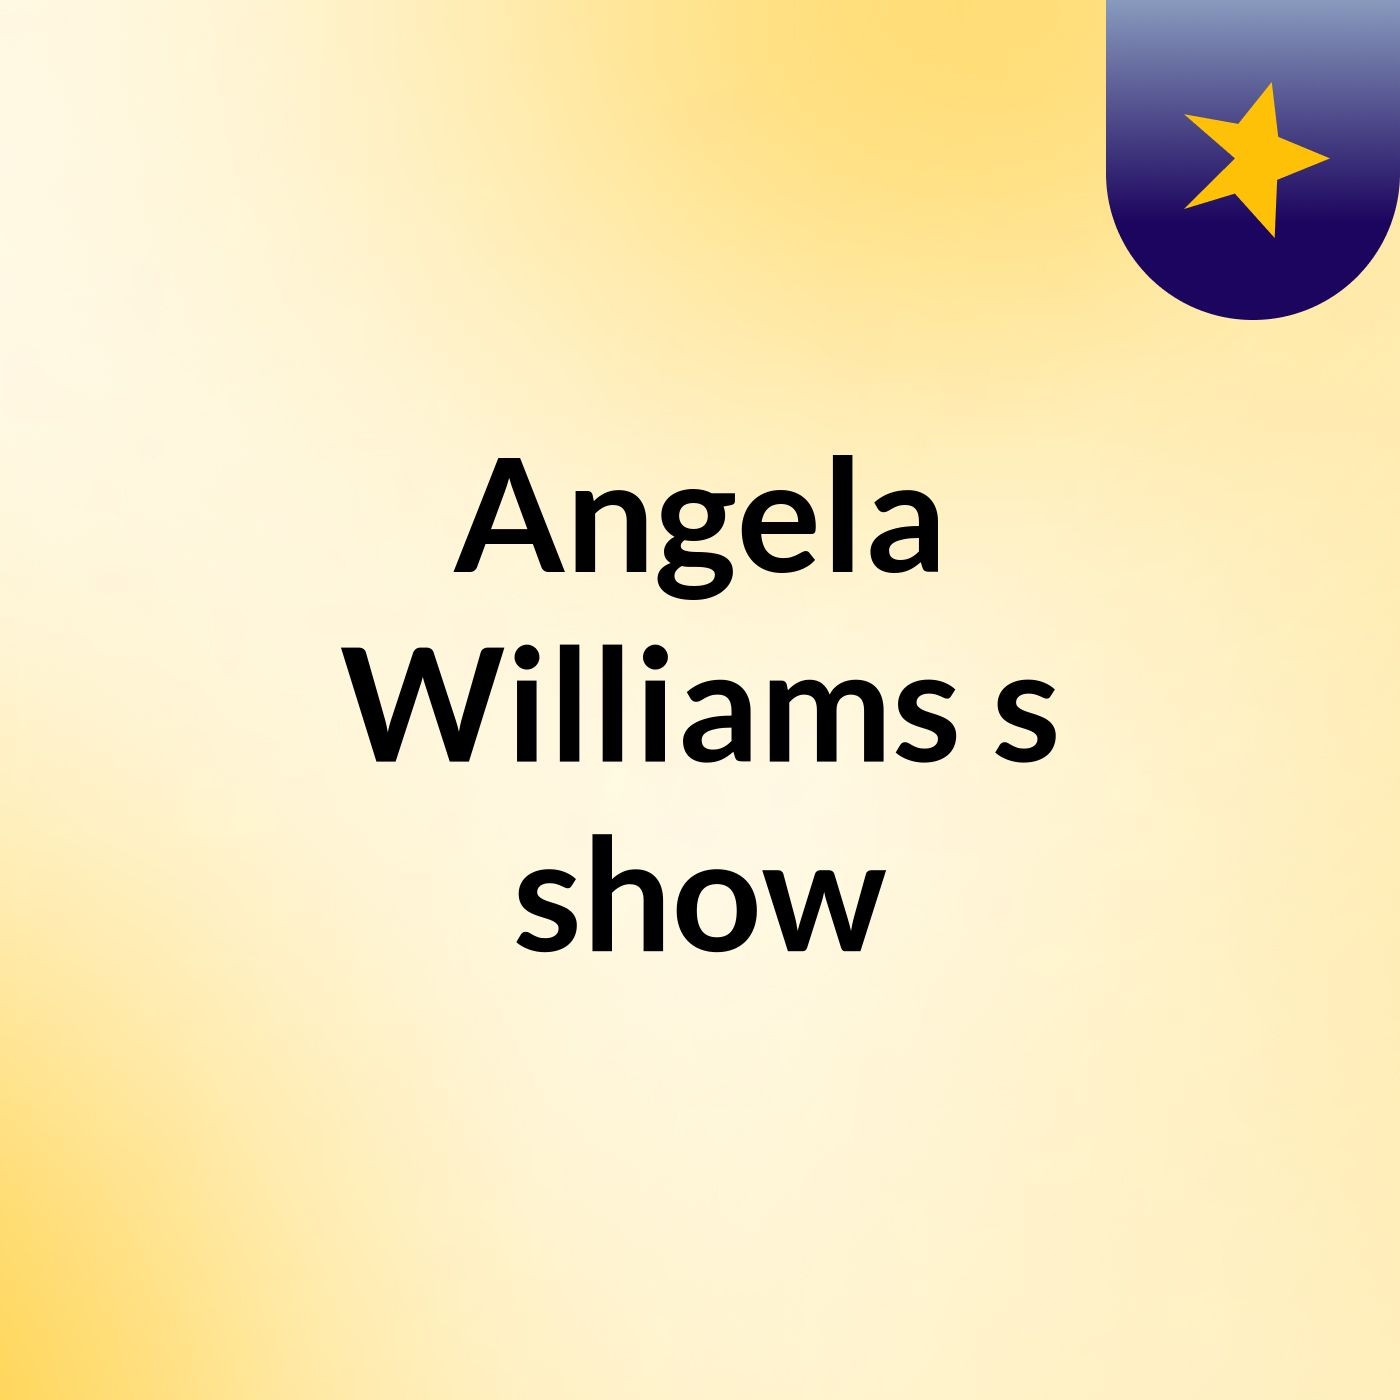 Episode 2 - Angela Williams's show